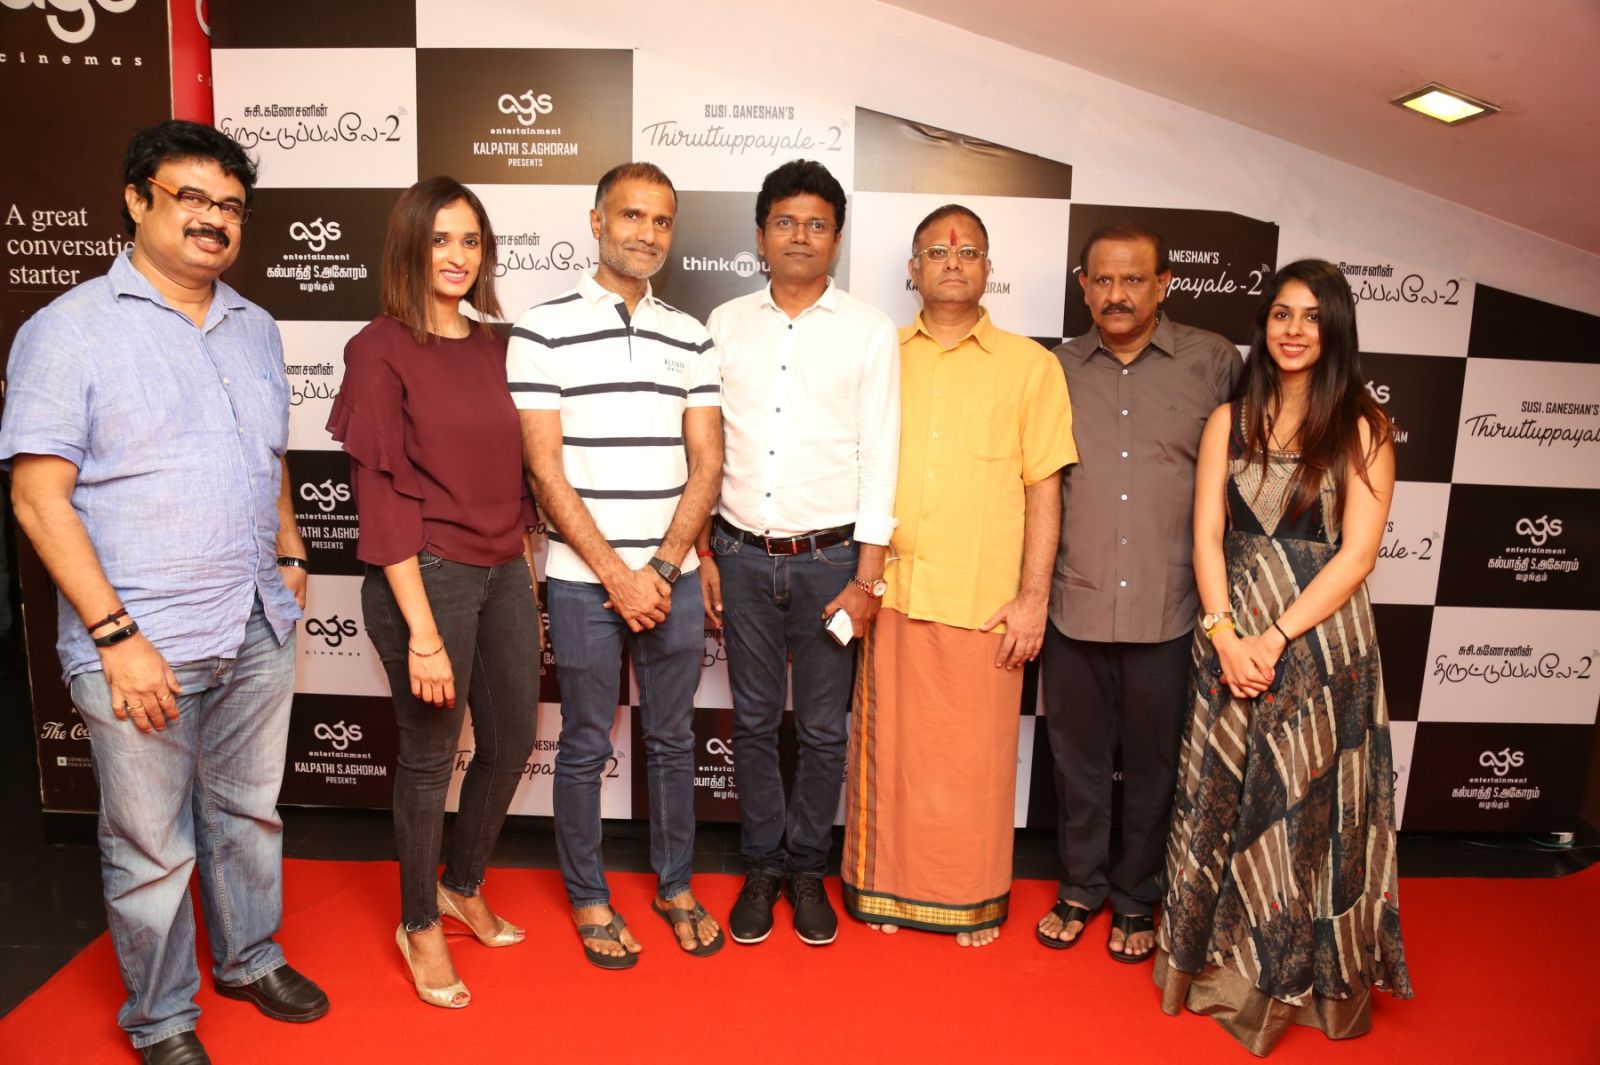 Thiruttuppayale 2 Red Carpet Premiere Show Stills (33)